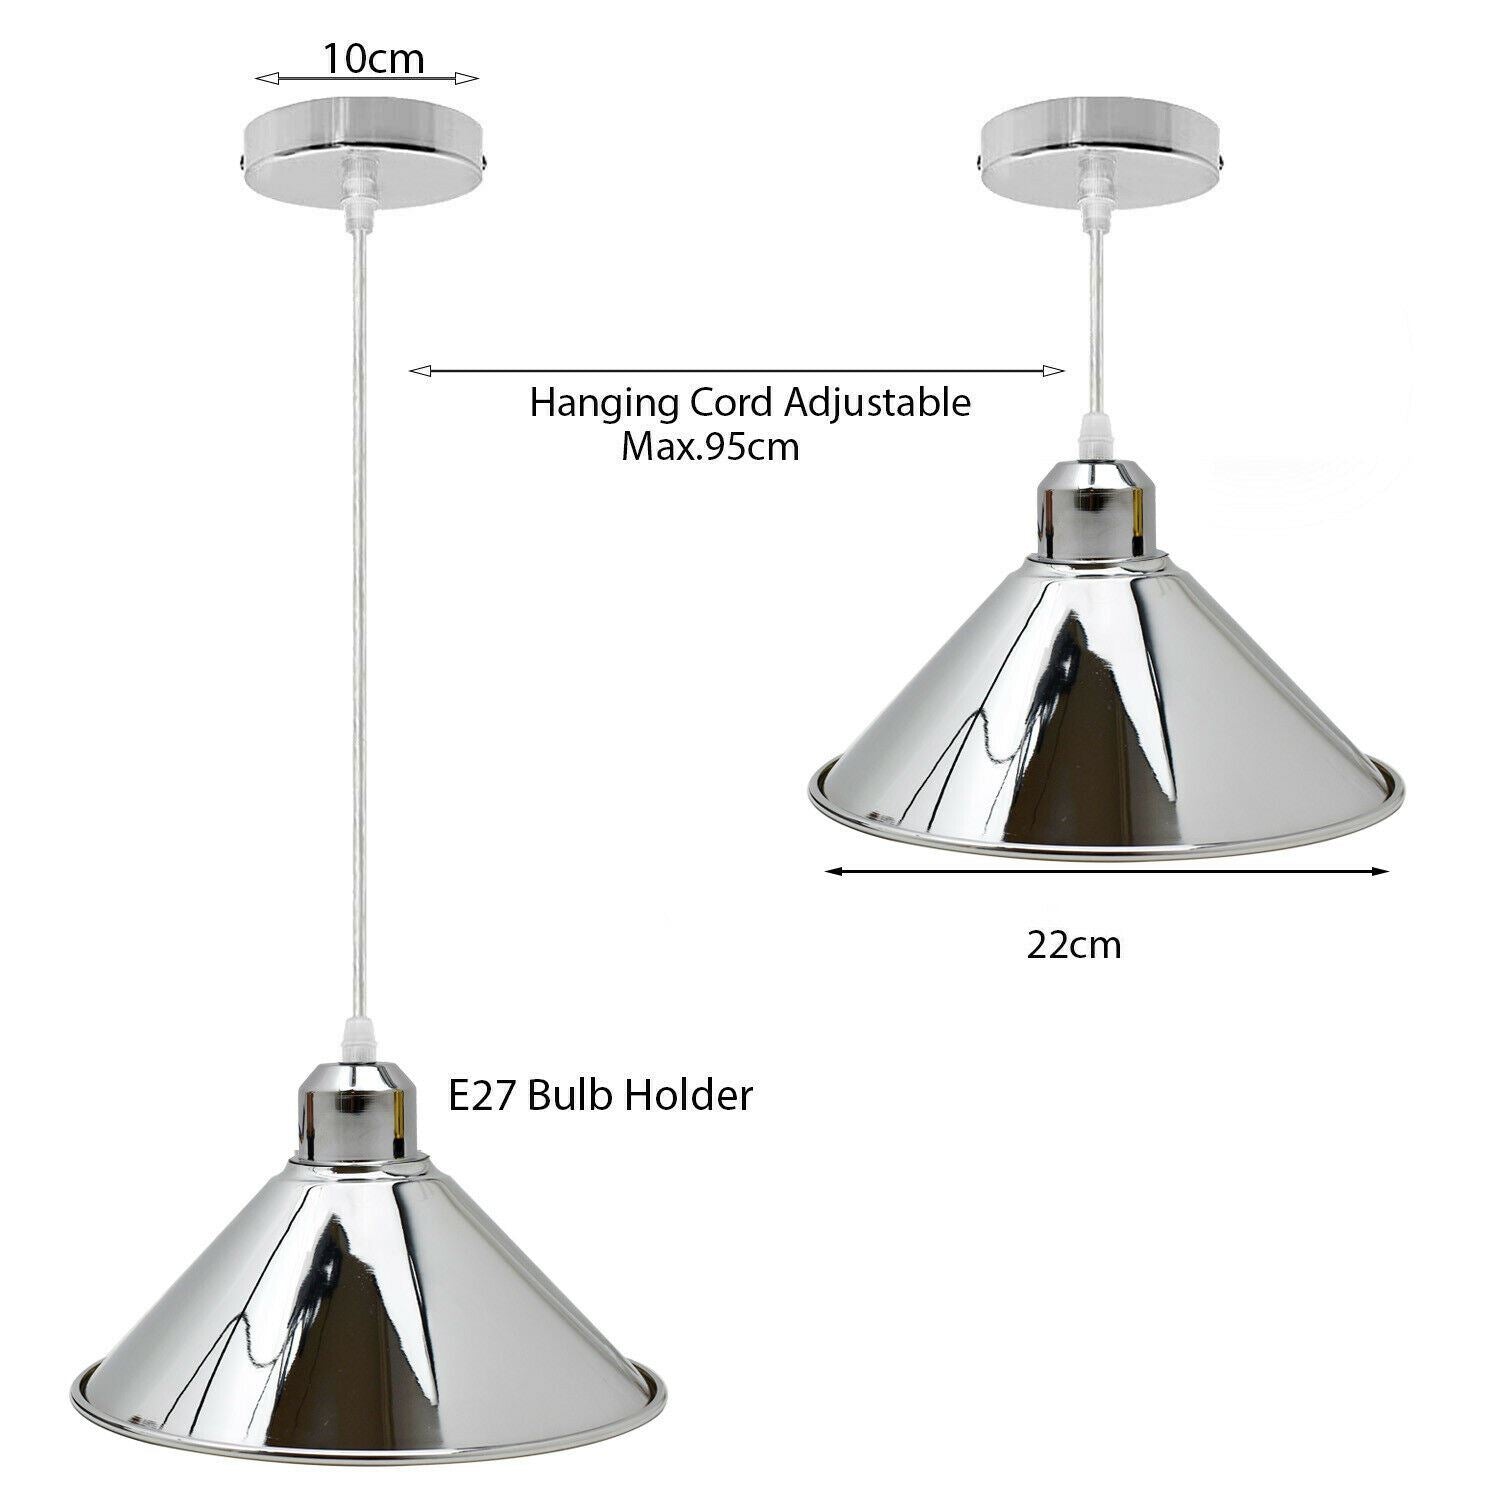 Modern Industrial Loft Chrome Ceiling Pendant Light Metal Cone Shape Shade Indoor Hanging Light Fitting For Basement, Bedroom, Conservatory~1184 - LEDSone UK Ltd